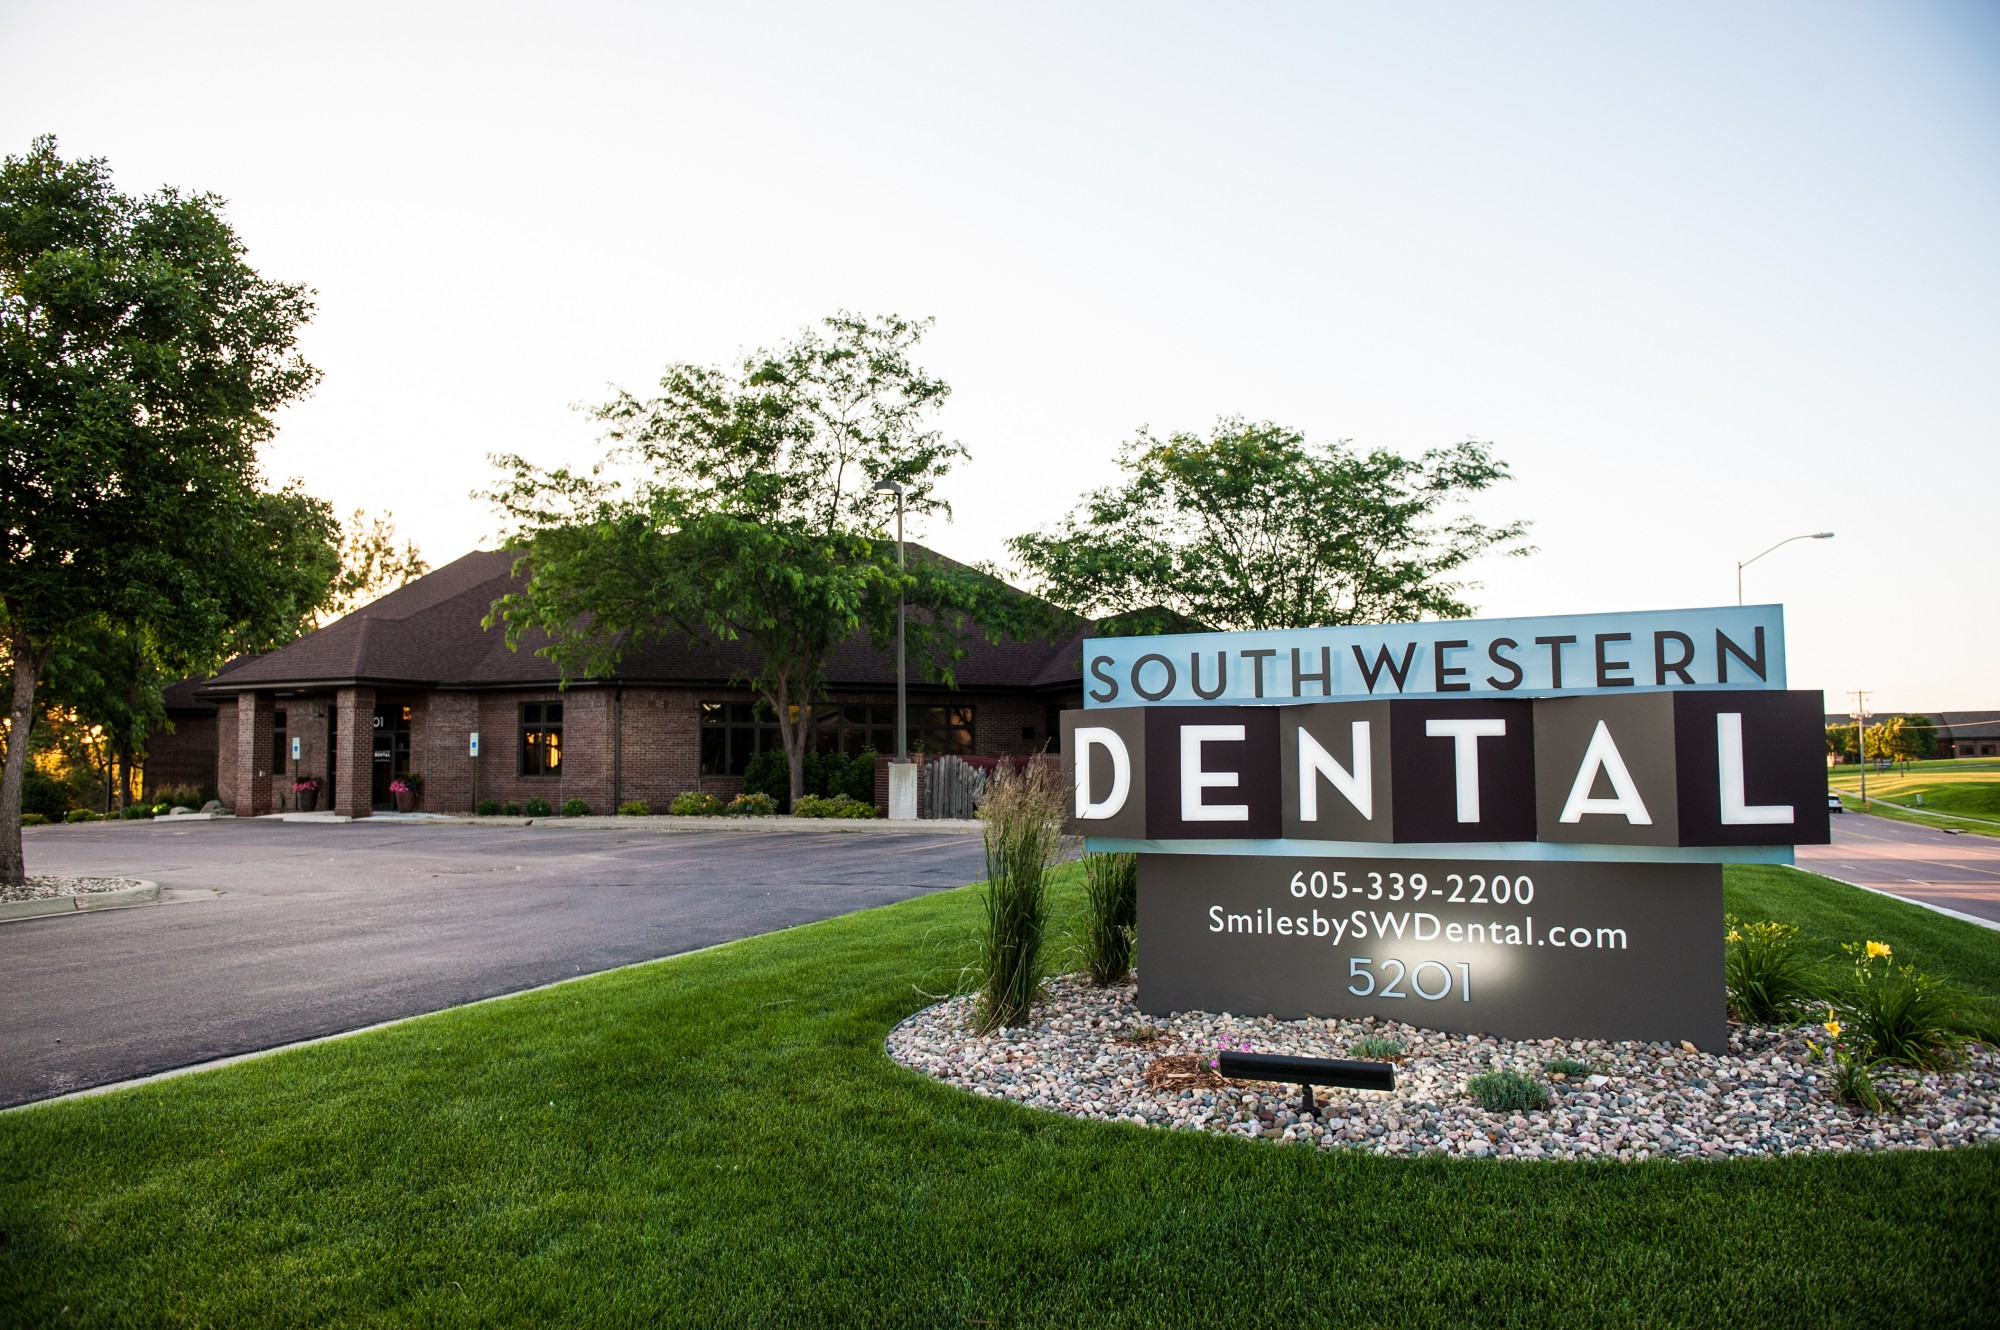 South Western dental on Western Avenue in Sioux Falls, SD